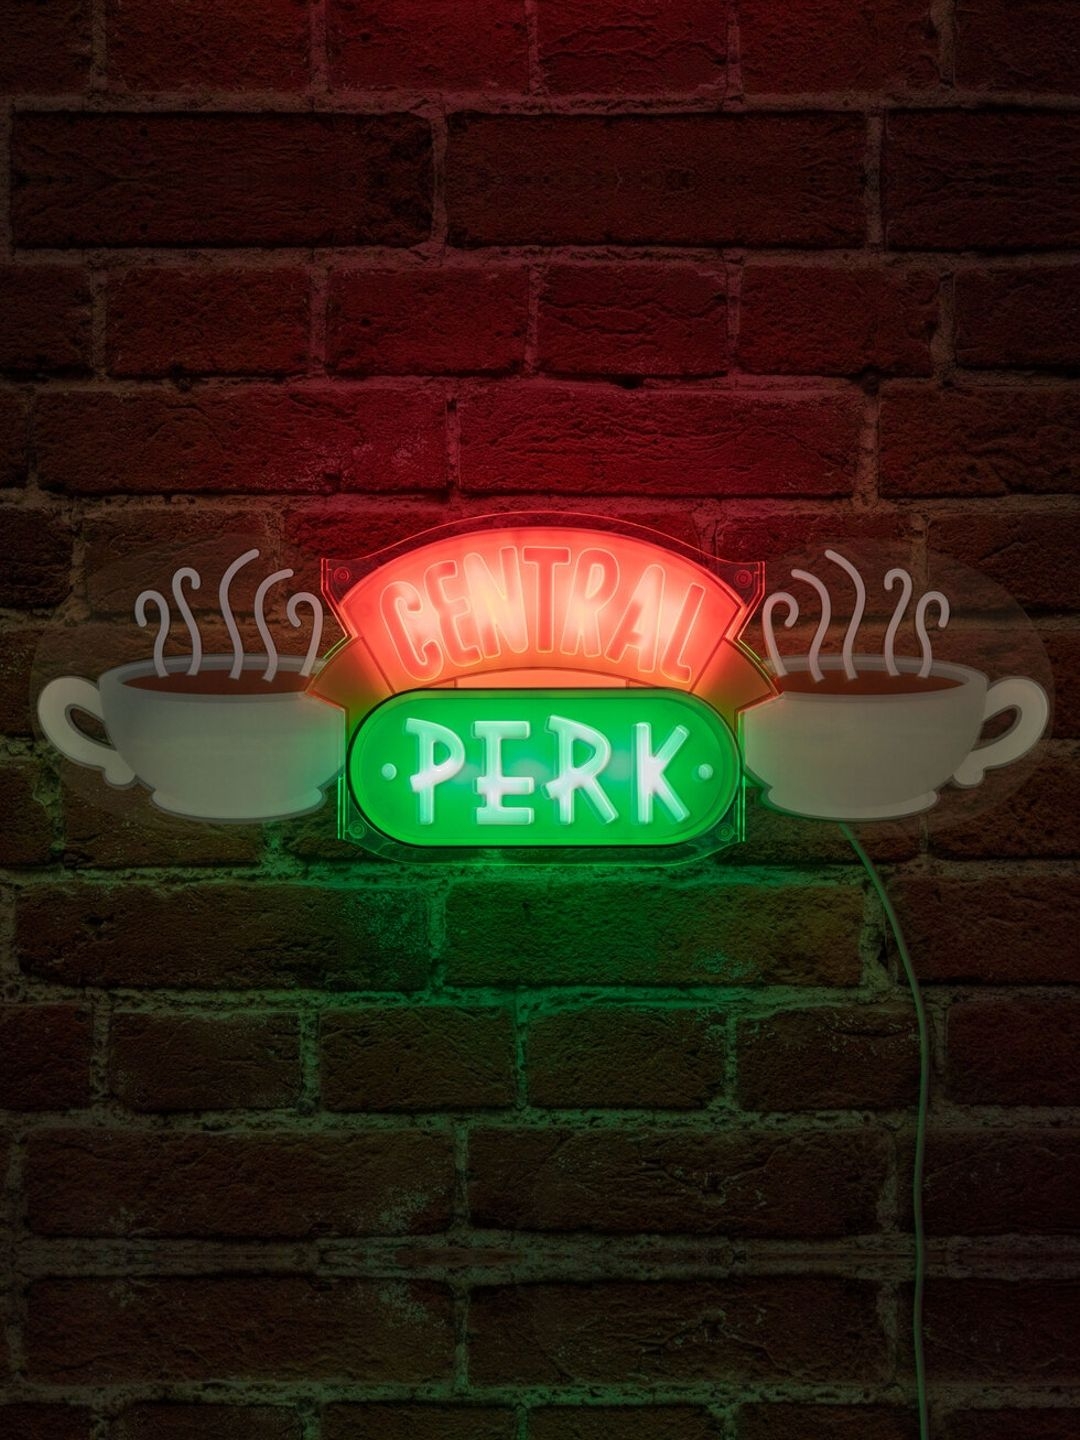 Guirlande lumineuse LED 2D - Central Perk - Friends - 2,5m